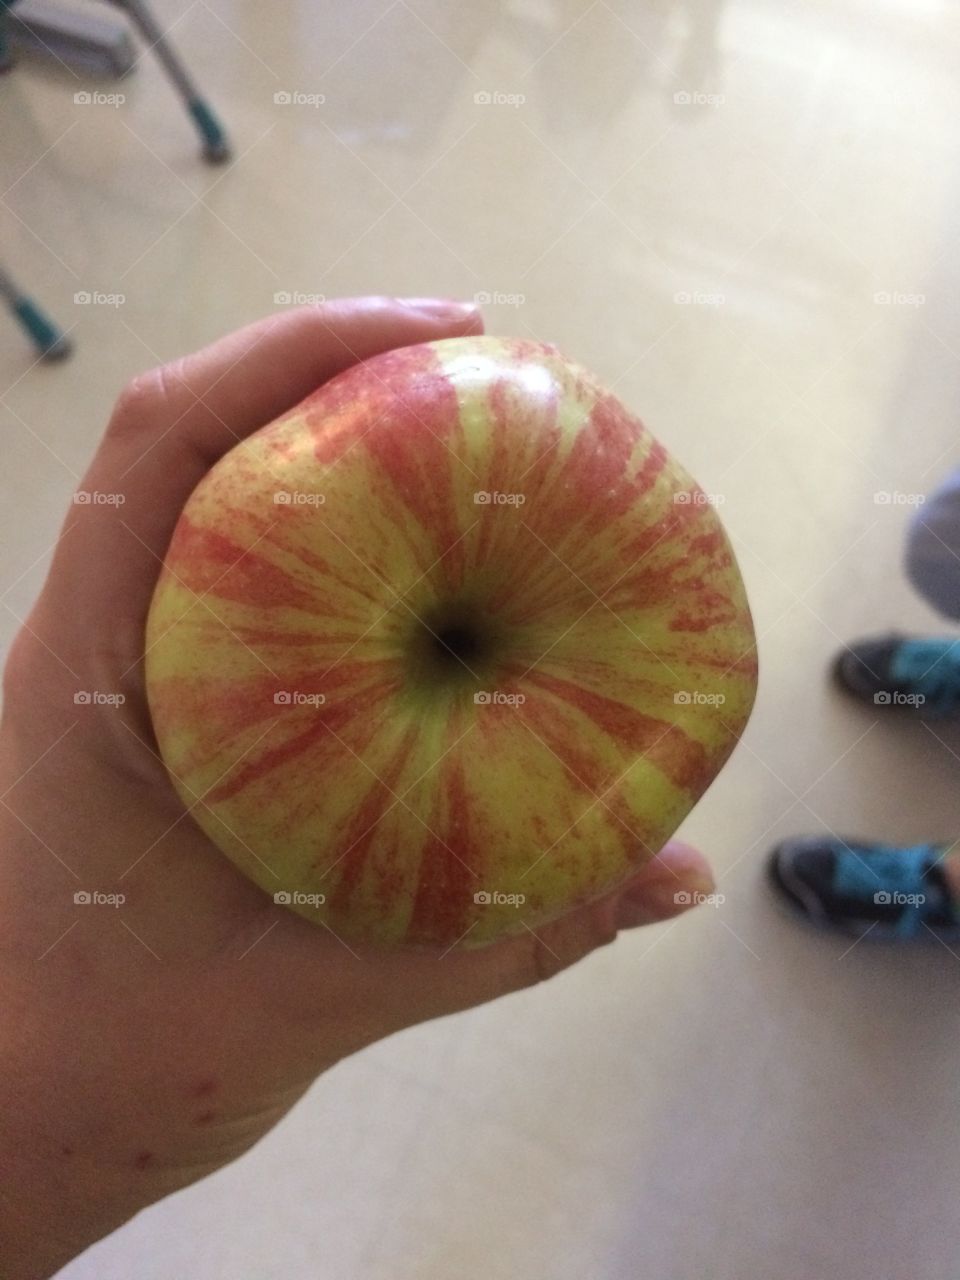 Stripy apple held in hand. 